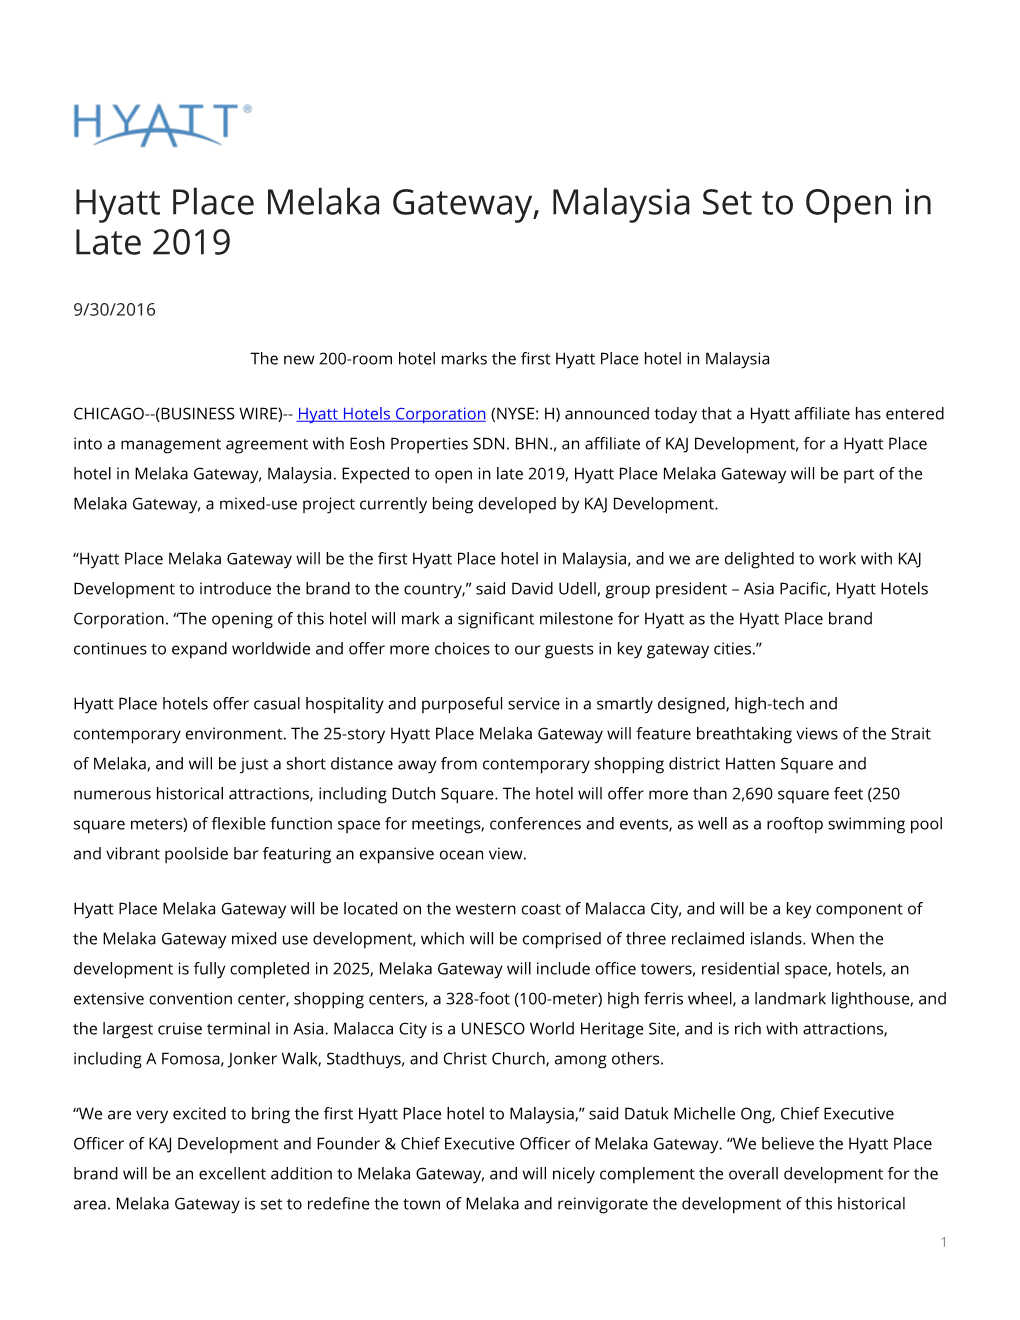 Hyatt Place Melaka Gateway, Malaysia Set to Open in Late 2019